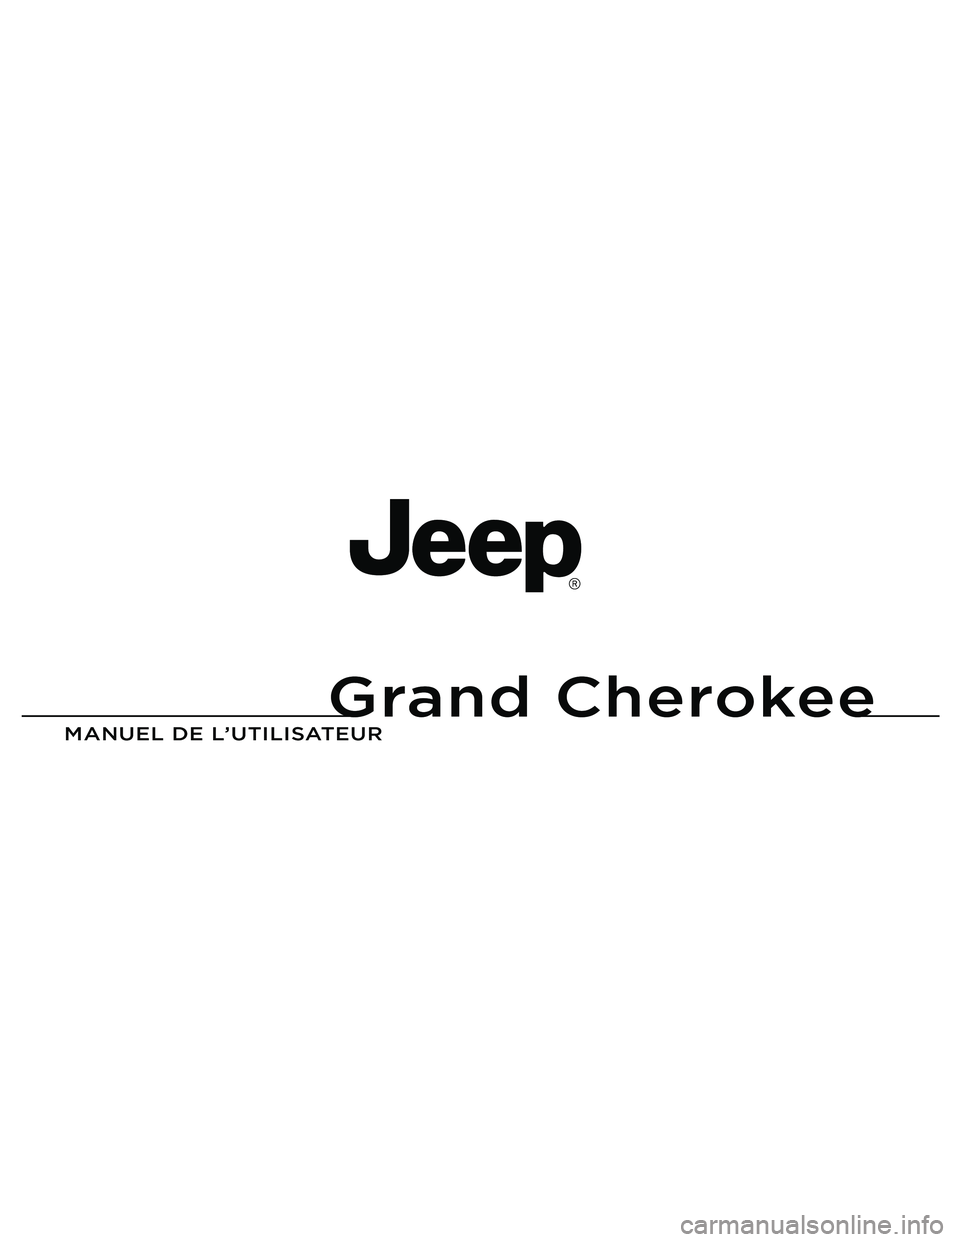 JEEP GRAND CHEROKEE 2016  Notice dentretien (in French) Grand Cherokee
MANUEL DE L’U\fILISA\fEUR 